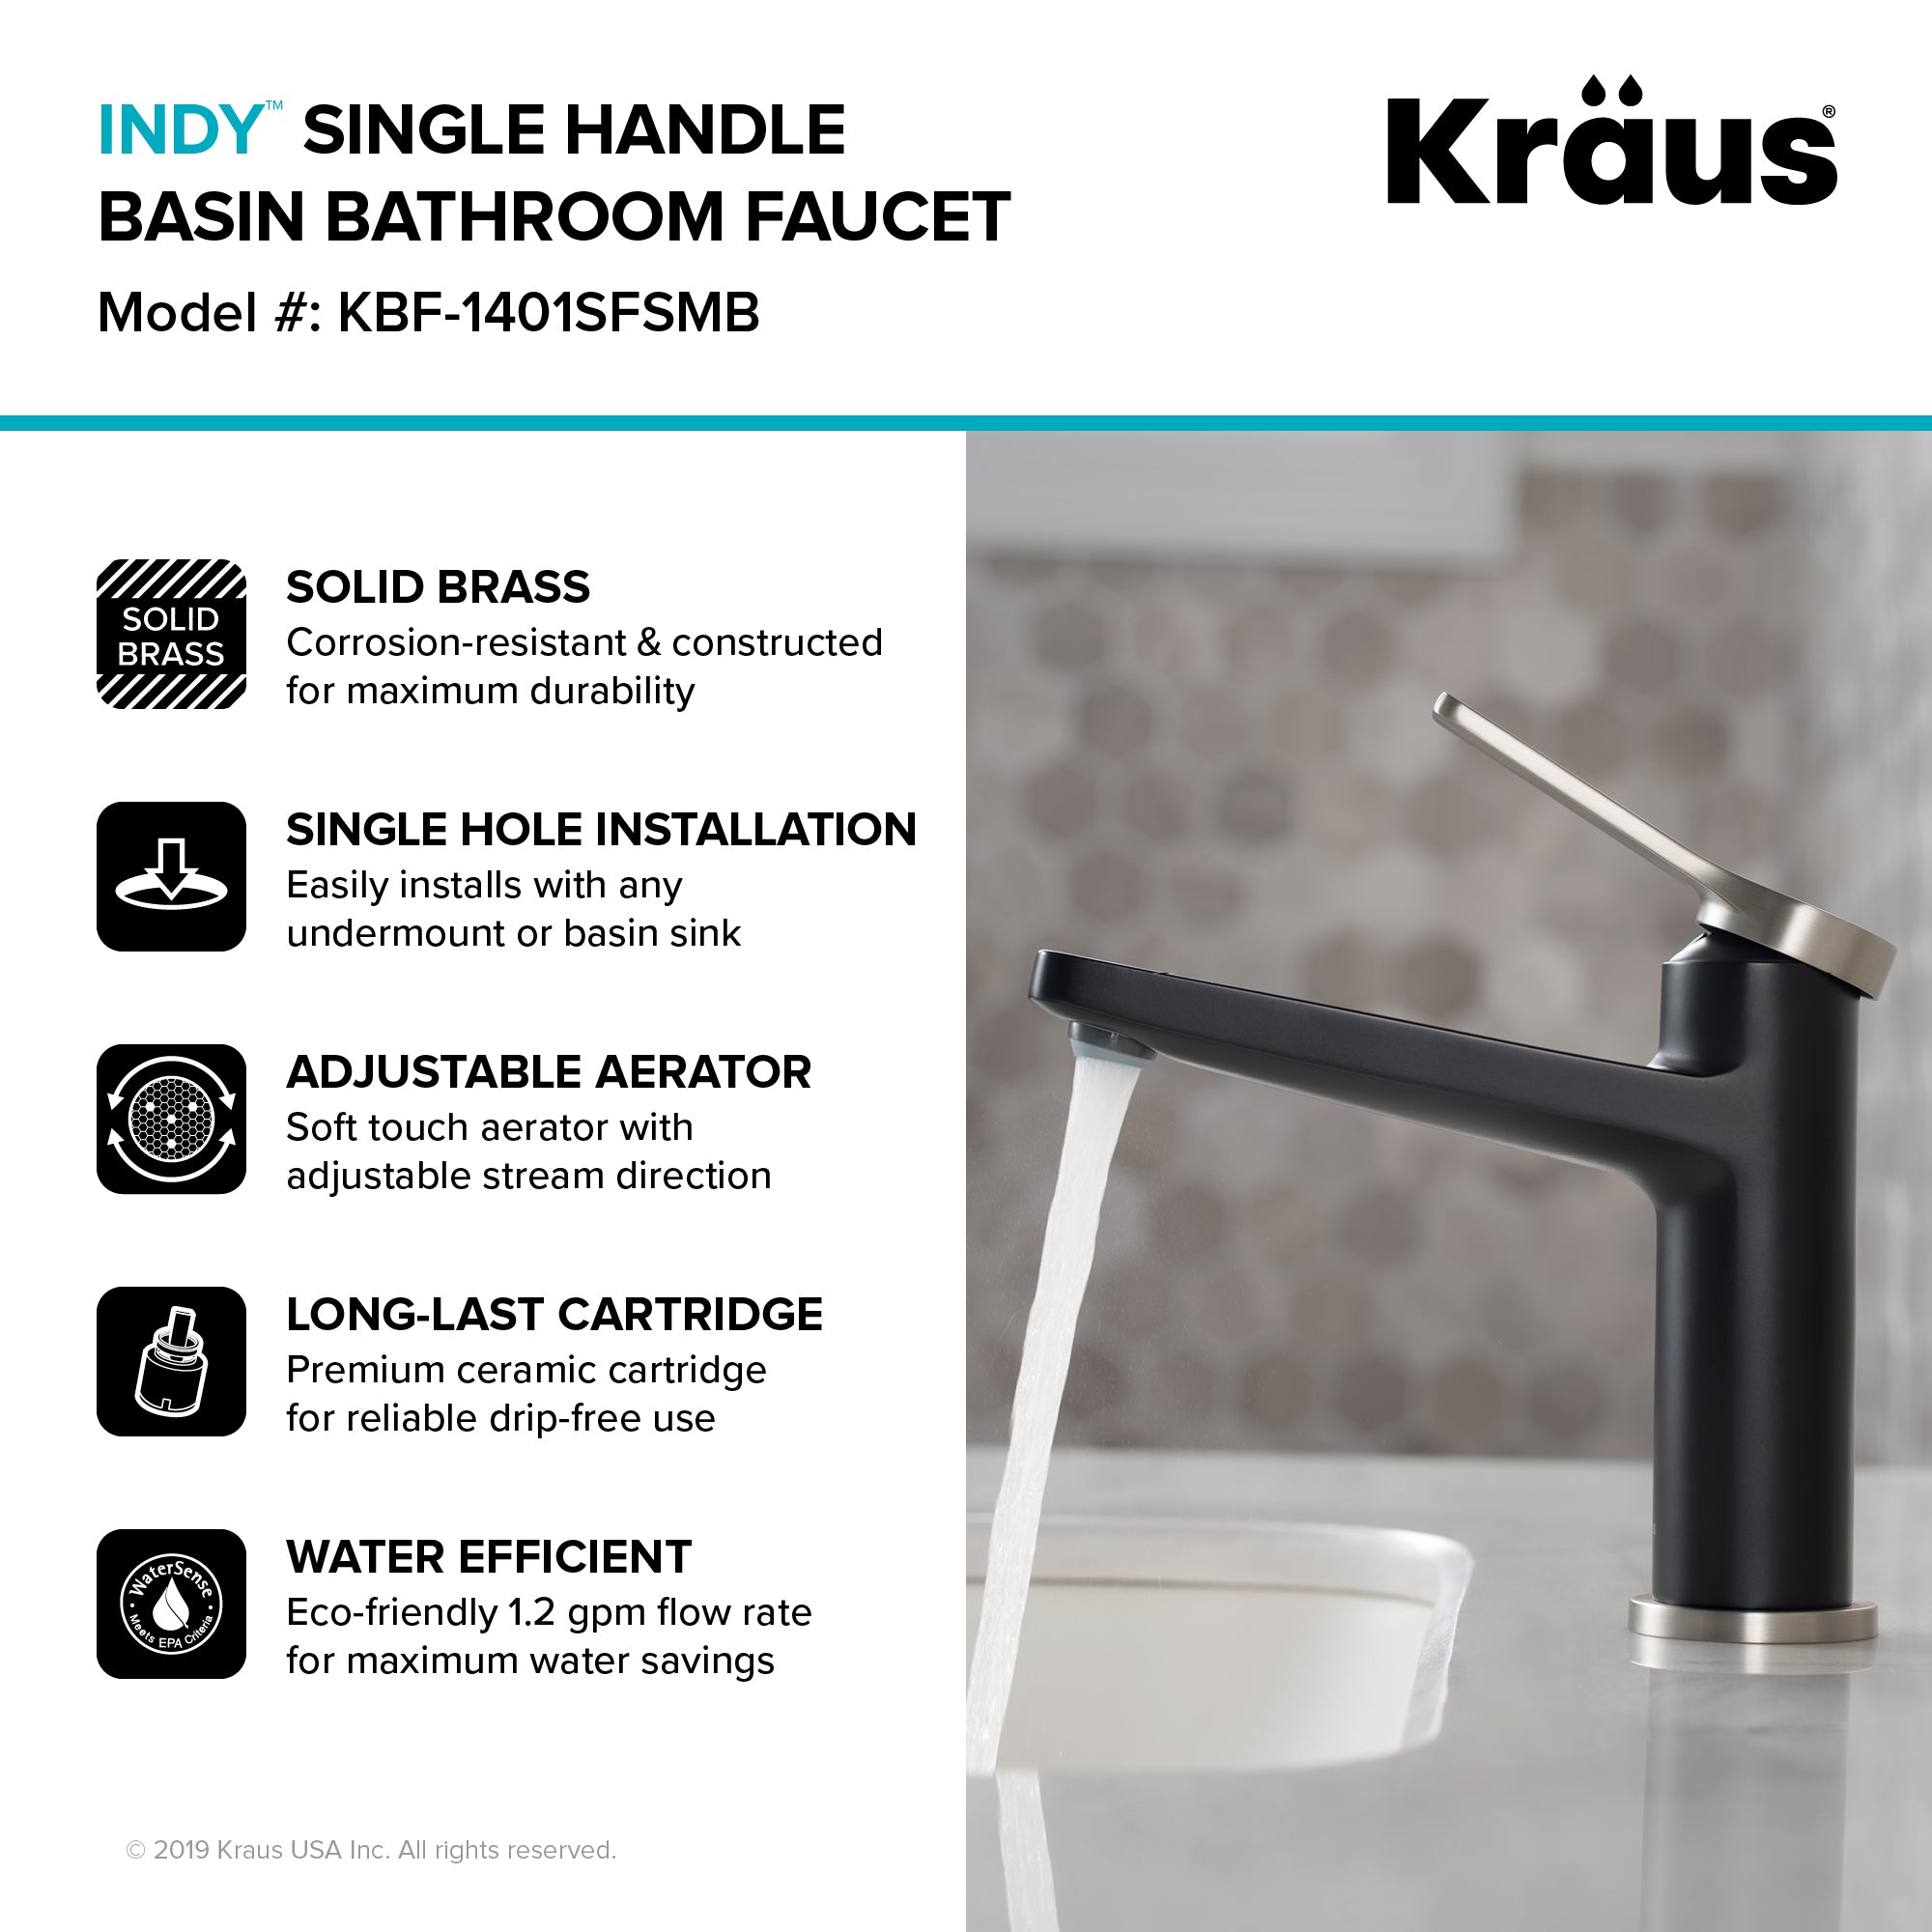 KRAUS Indy Single Handle Bathroom Faucet in Spot Free Stainless Steel/Matte Black